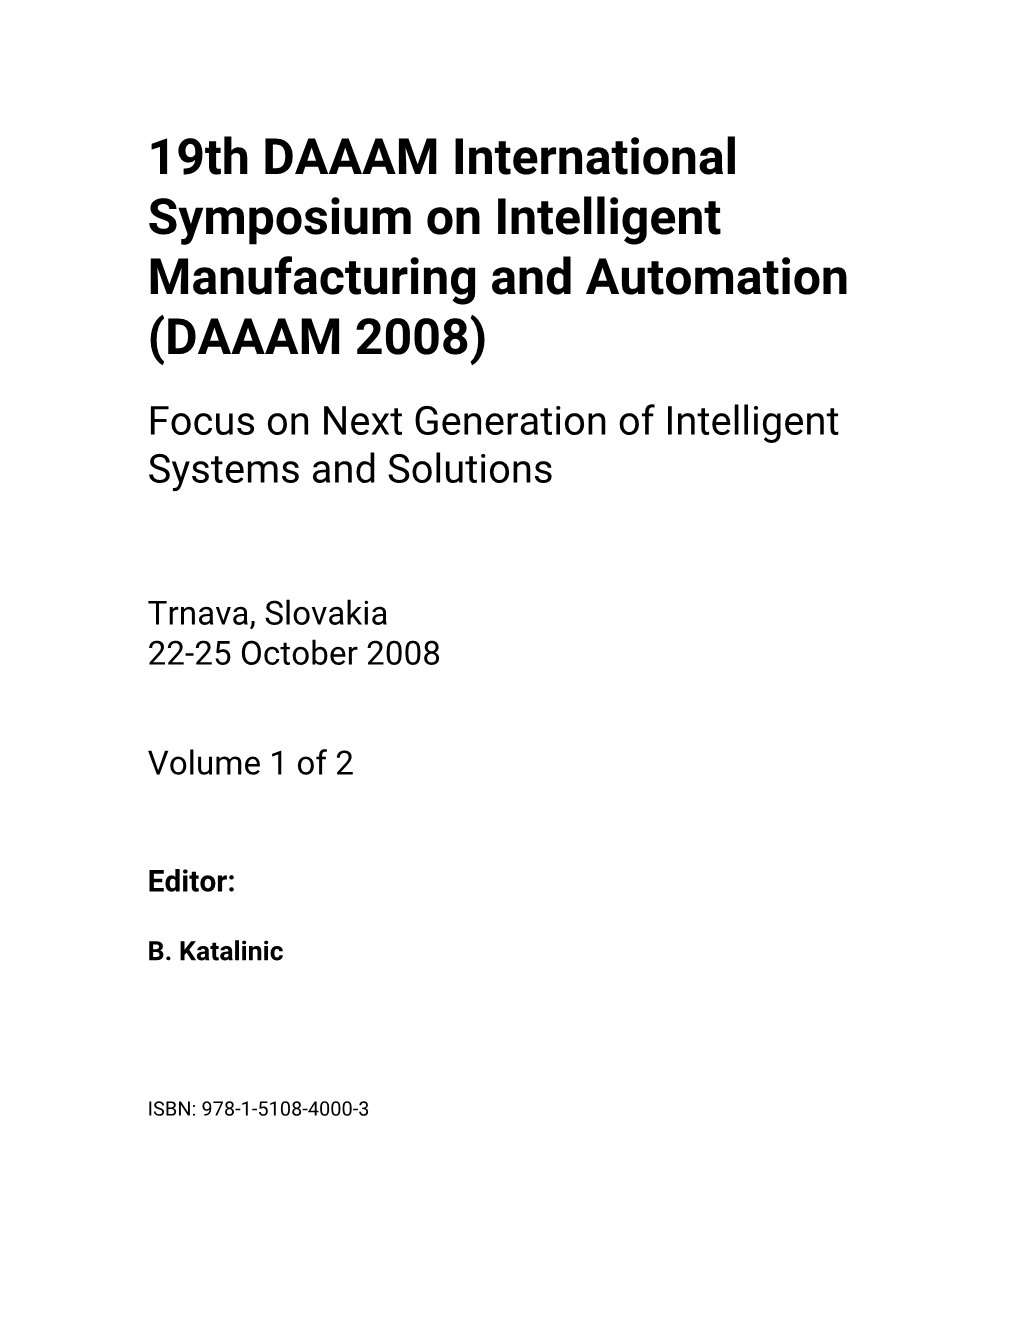 19Th DAAAM International Symposium on Intelligent